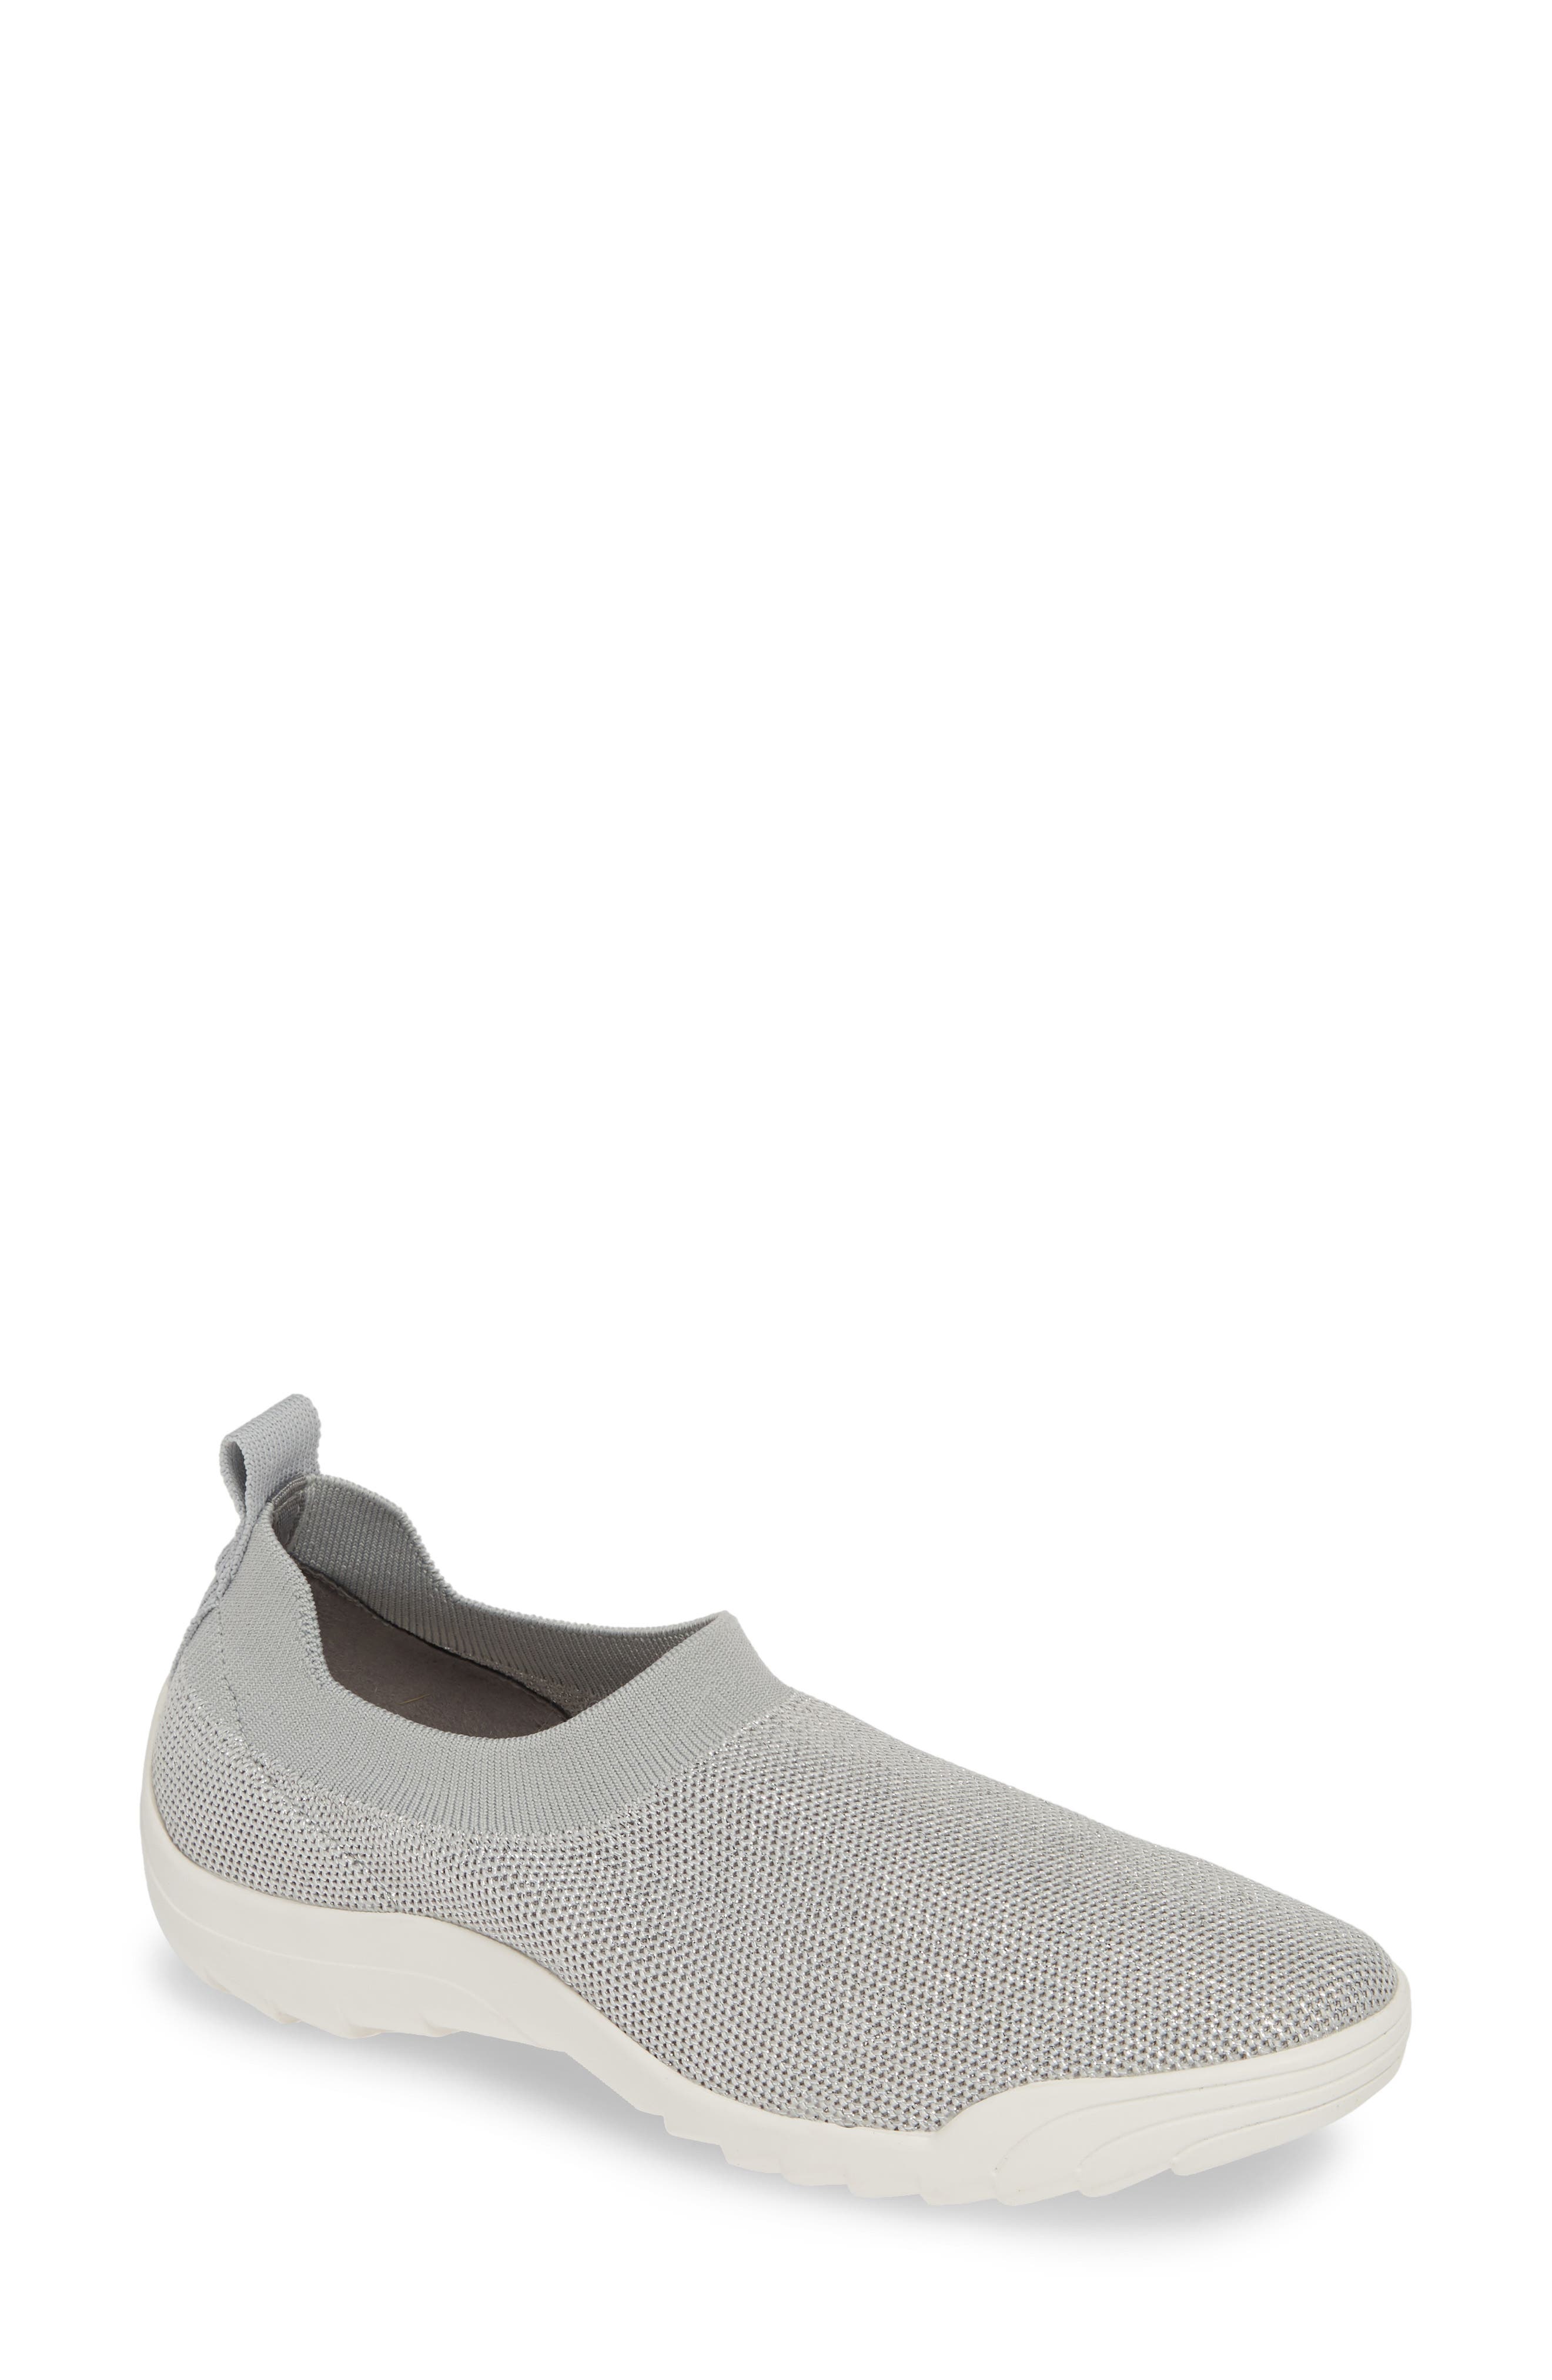 bernie mev. Shiloh Sneaker in Light Grey/Silver Fabric